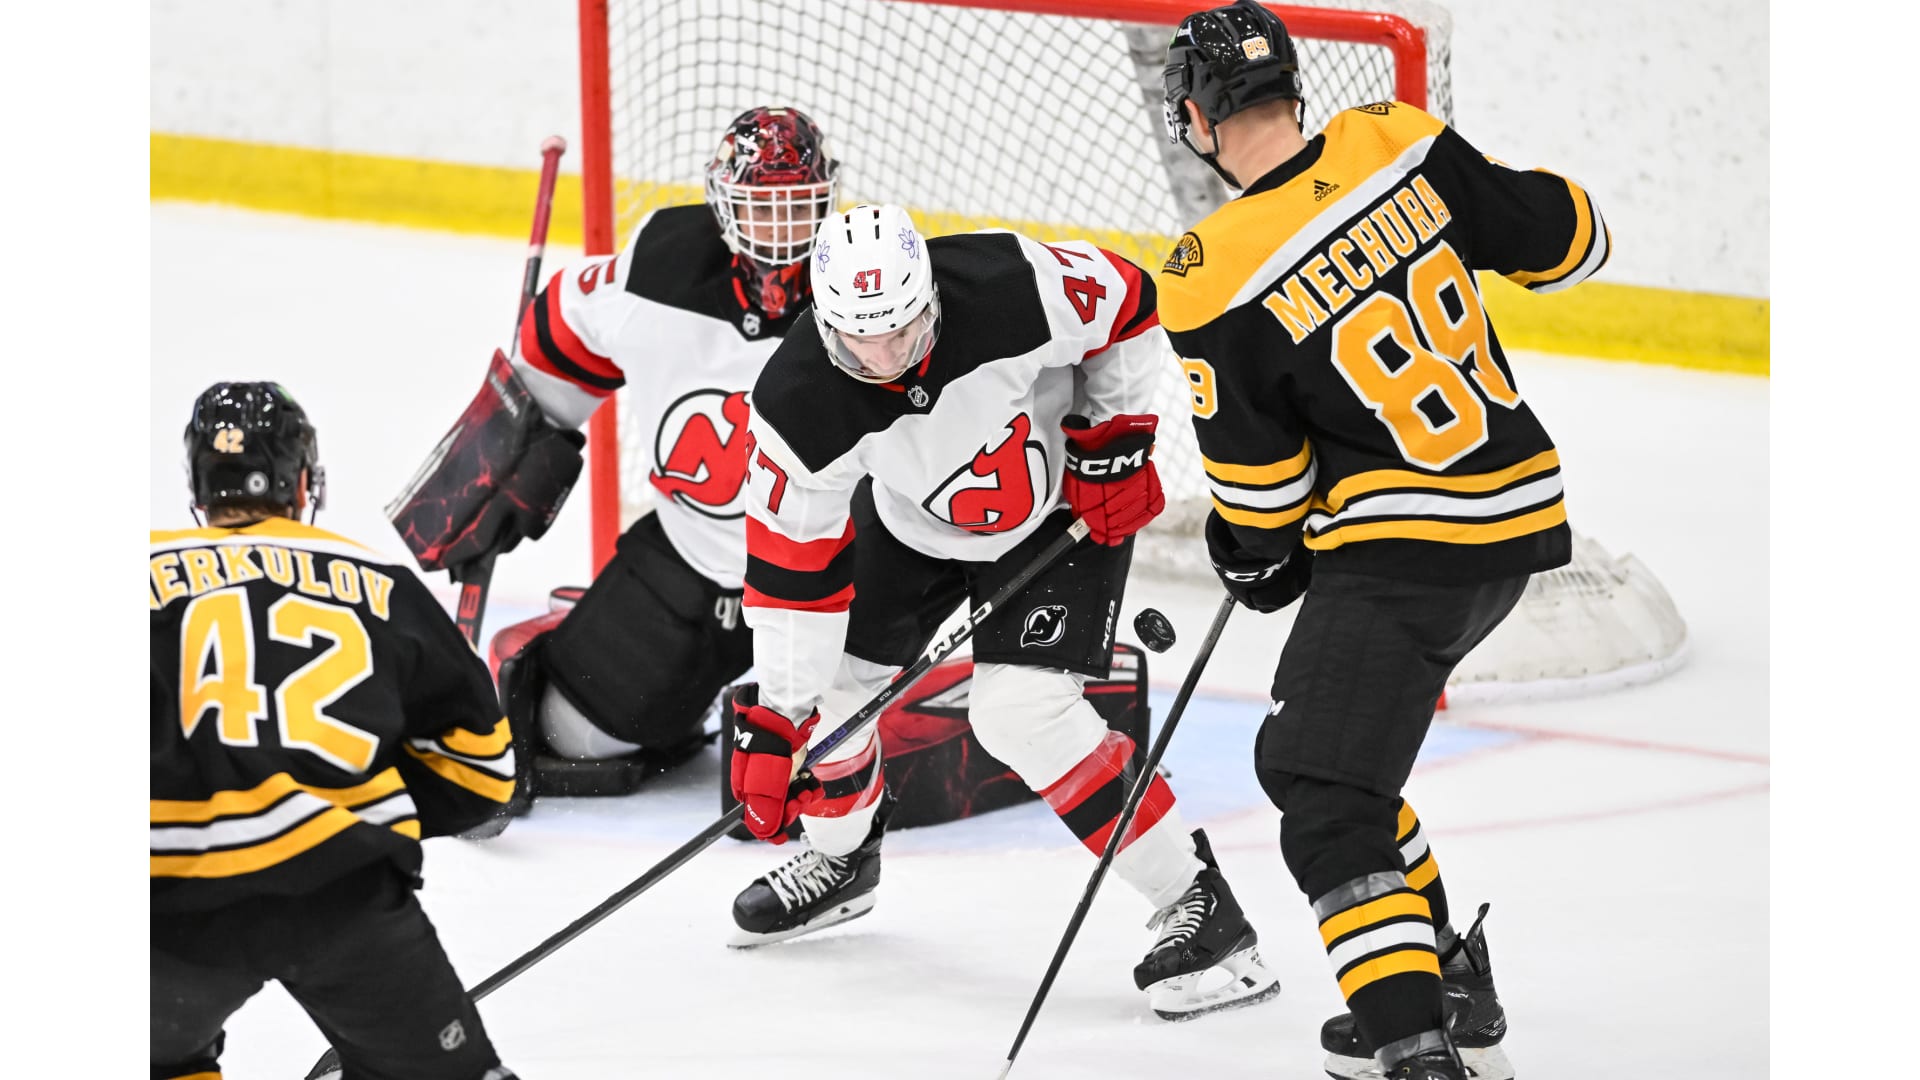 Event Feedback: New Jersey Devils - NHL vs Boston Bruins